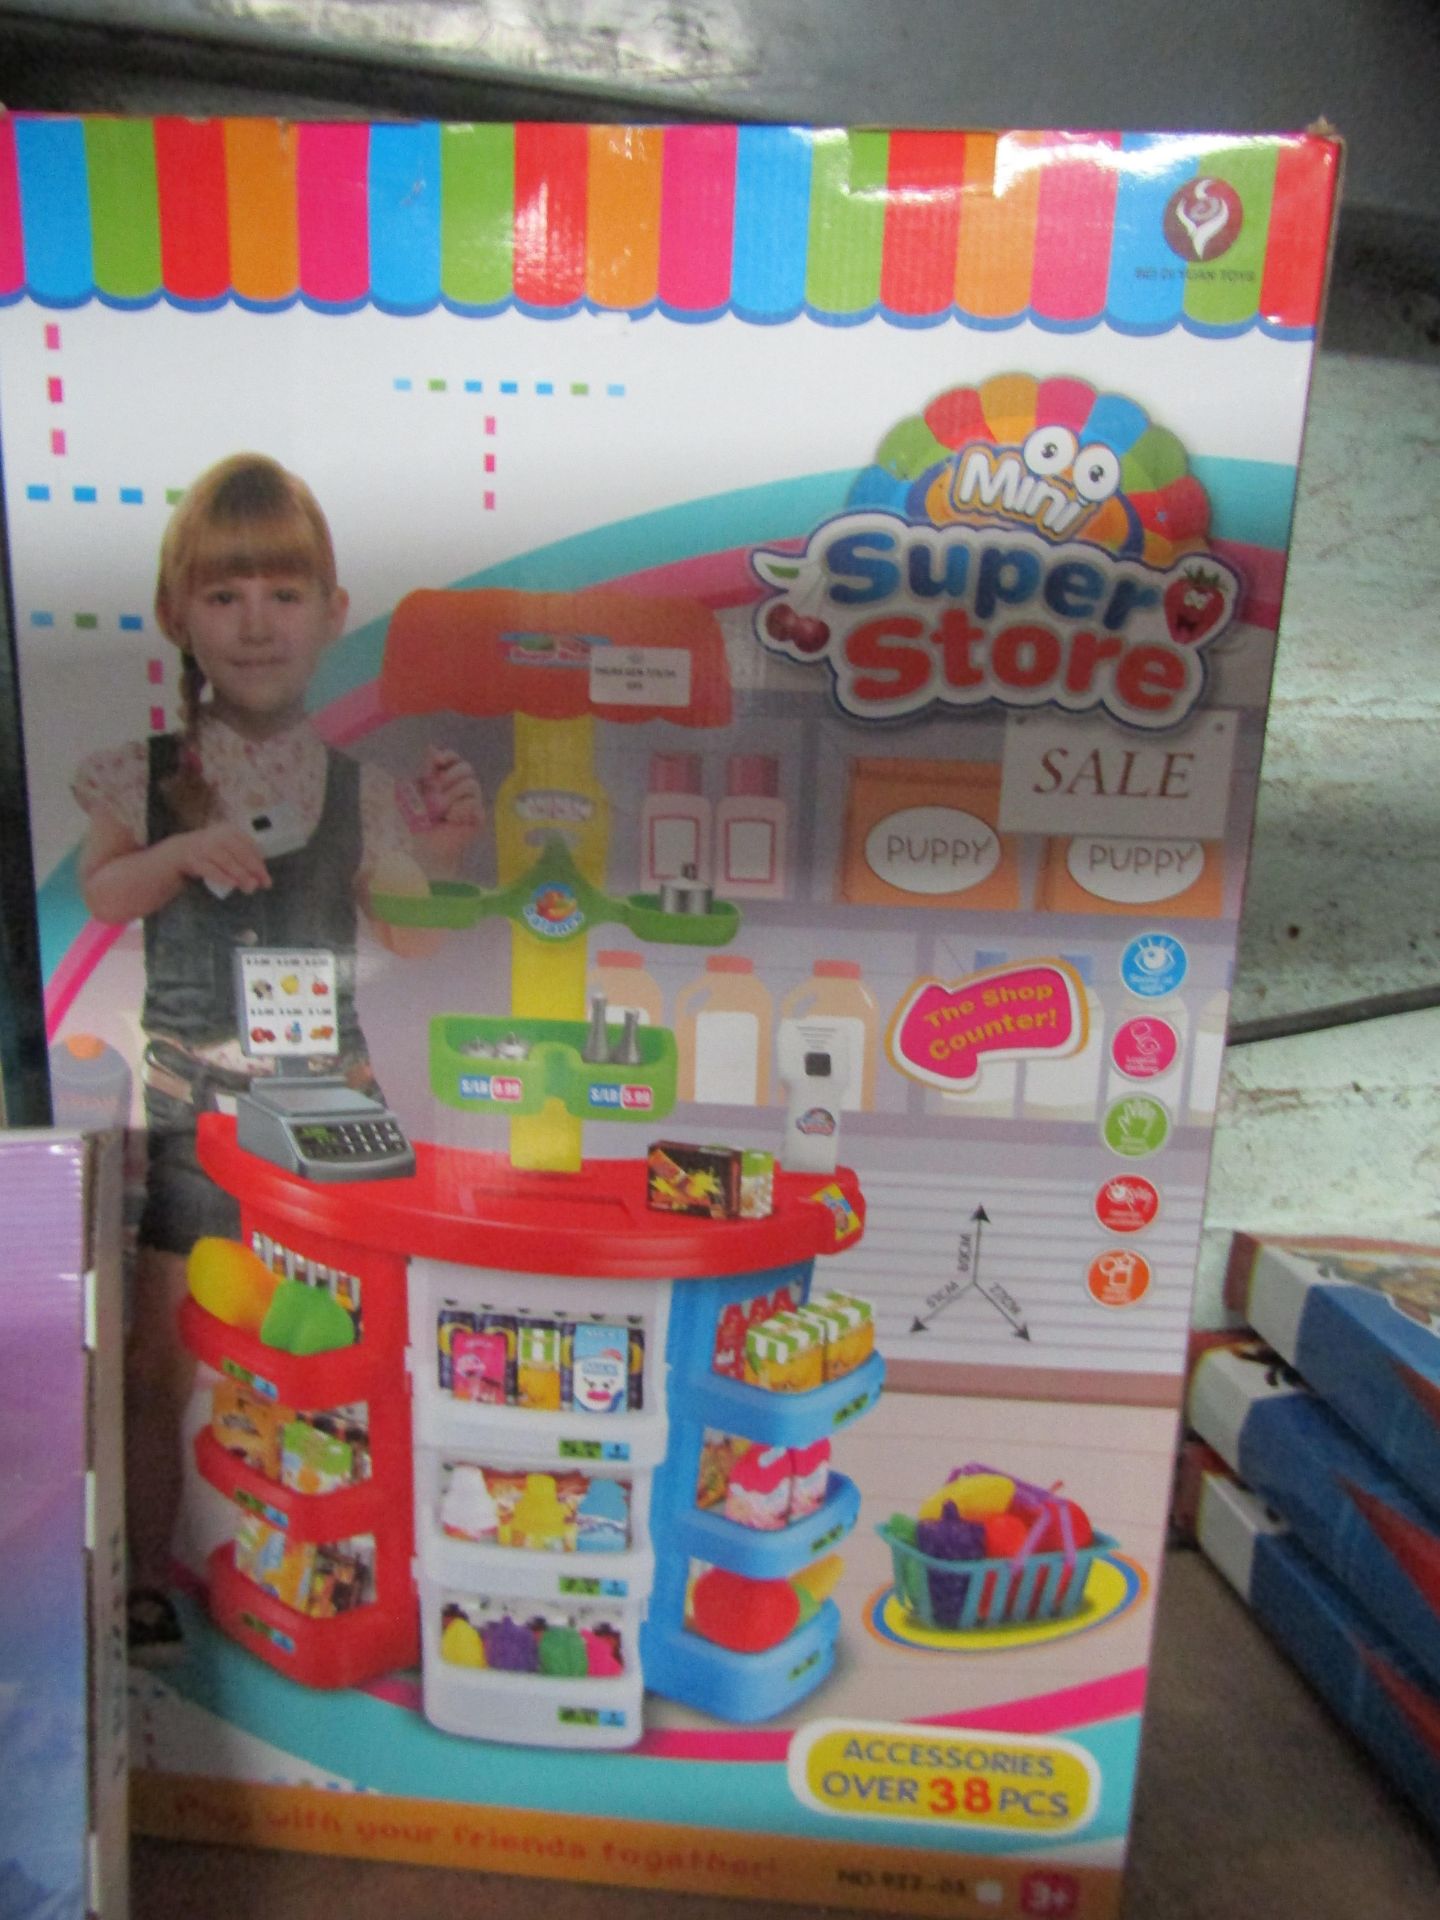 Kids Mini Super Store Shop Counter - Unchecked Show Room Sample.